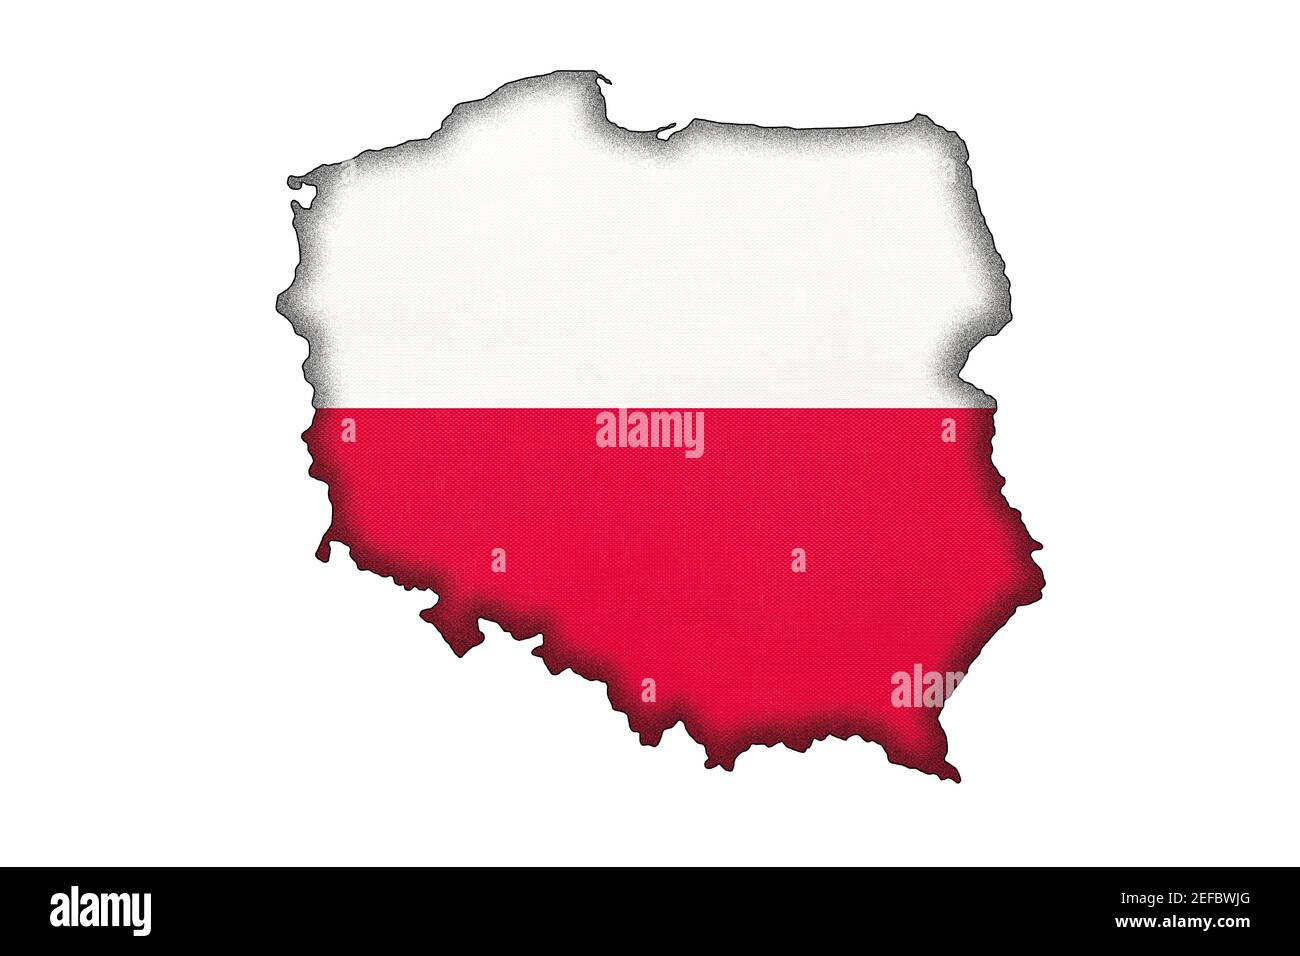 Silueta de la frontera de Polonia con bandera nacional aislada sobre fondo blanco con espacio de copia. Contorno del país europeo mundial en mapa geográfico. Polaco o Foto de stock